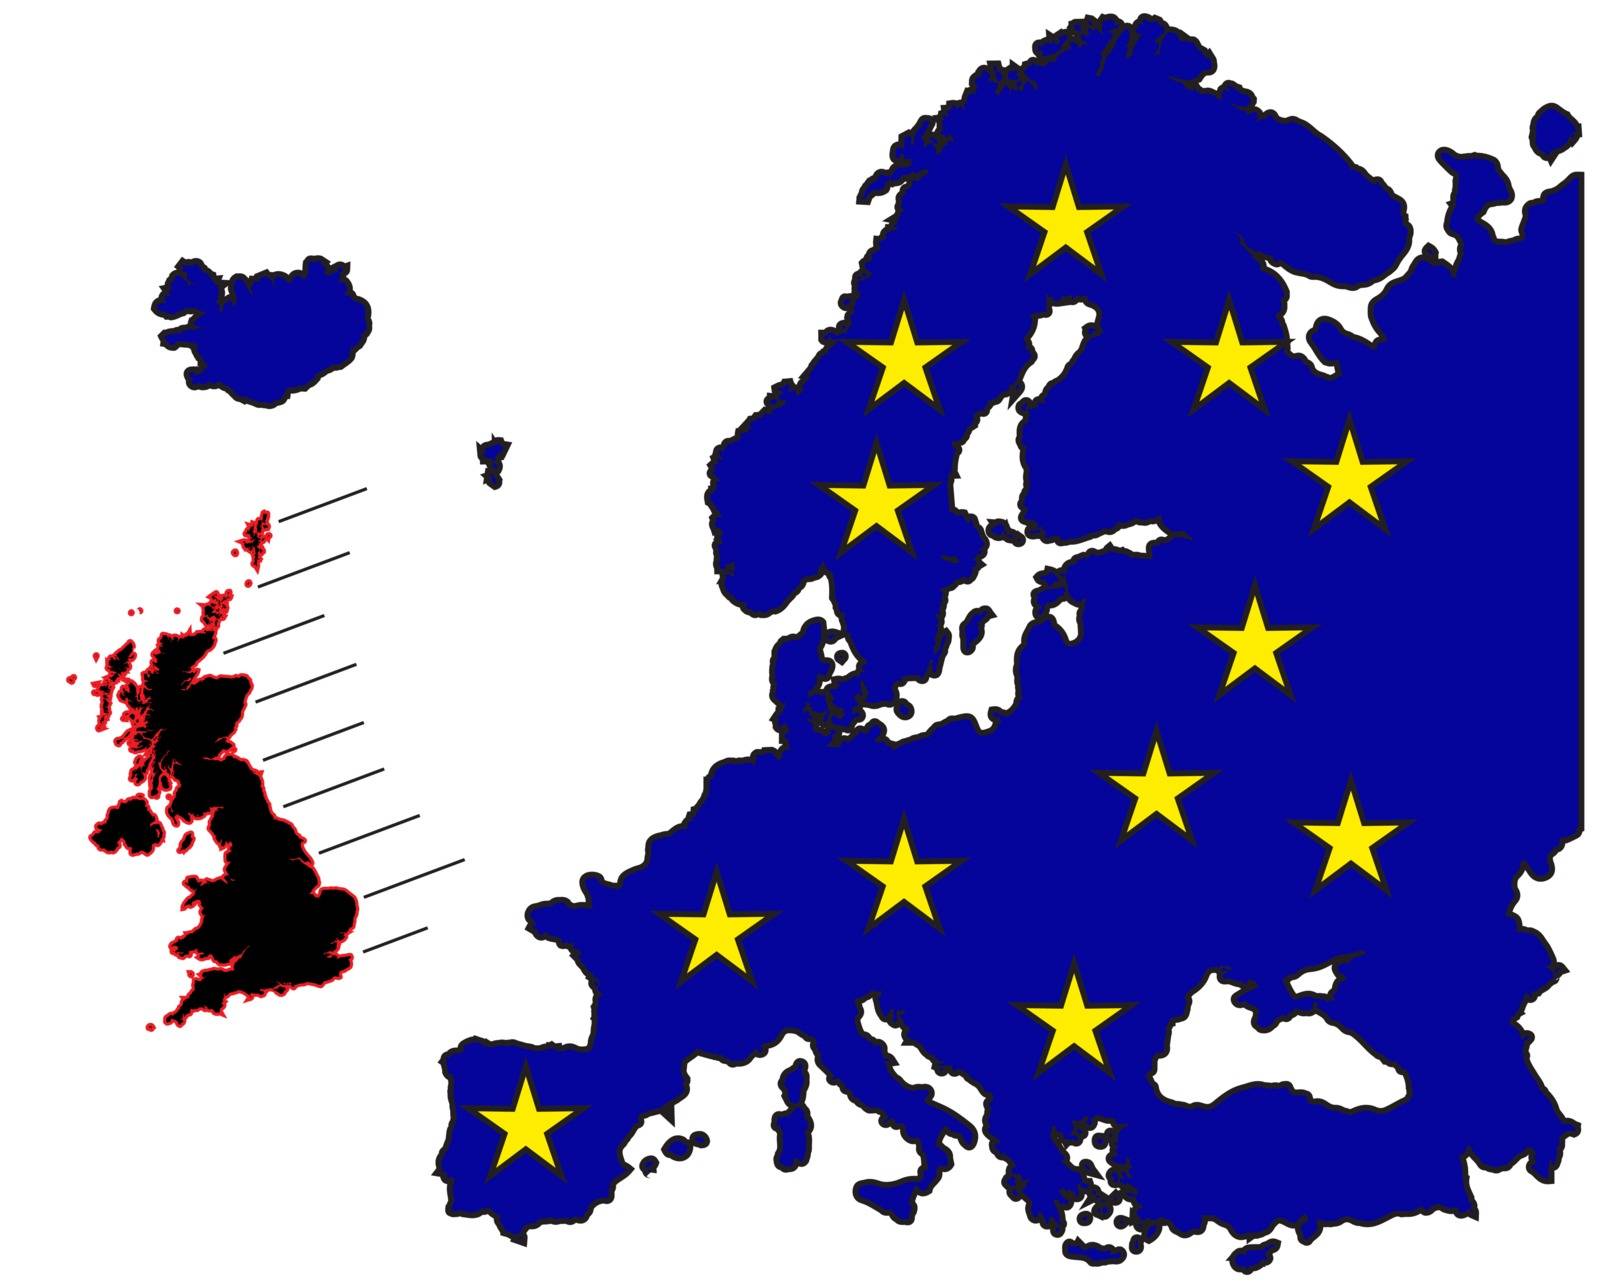 Britain Moving Away From EU by DavidScar